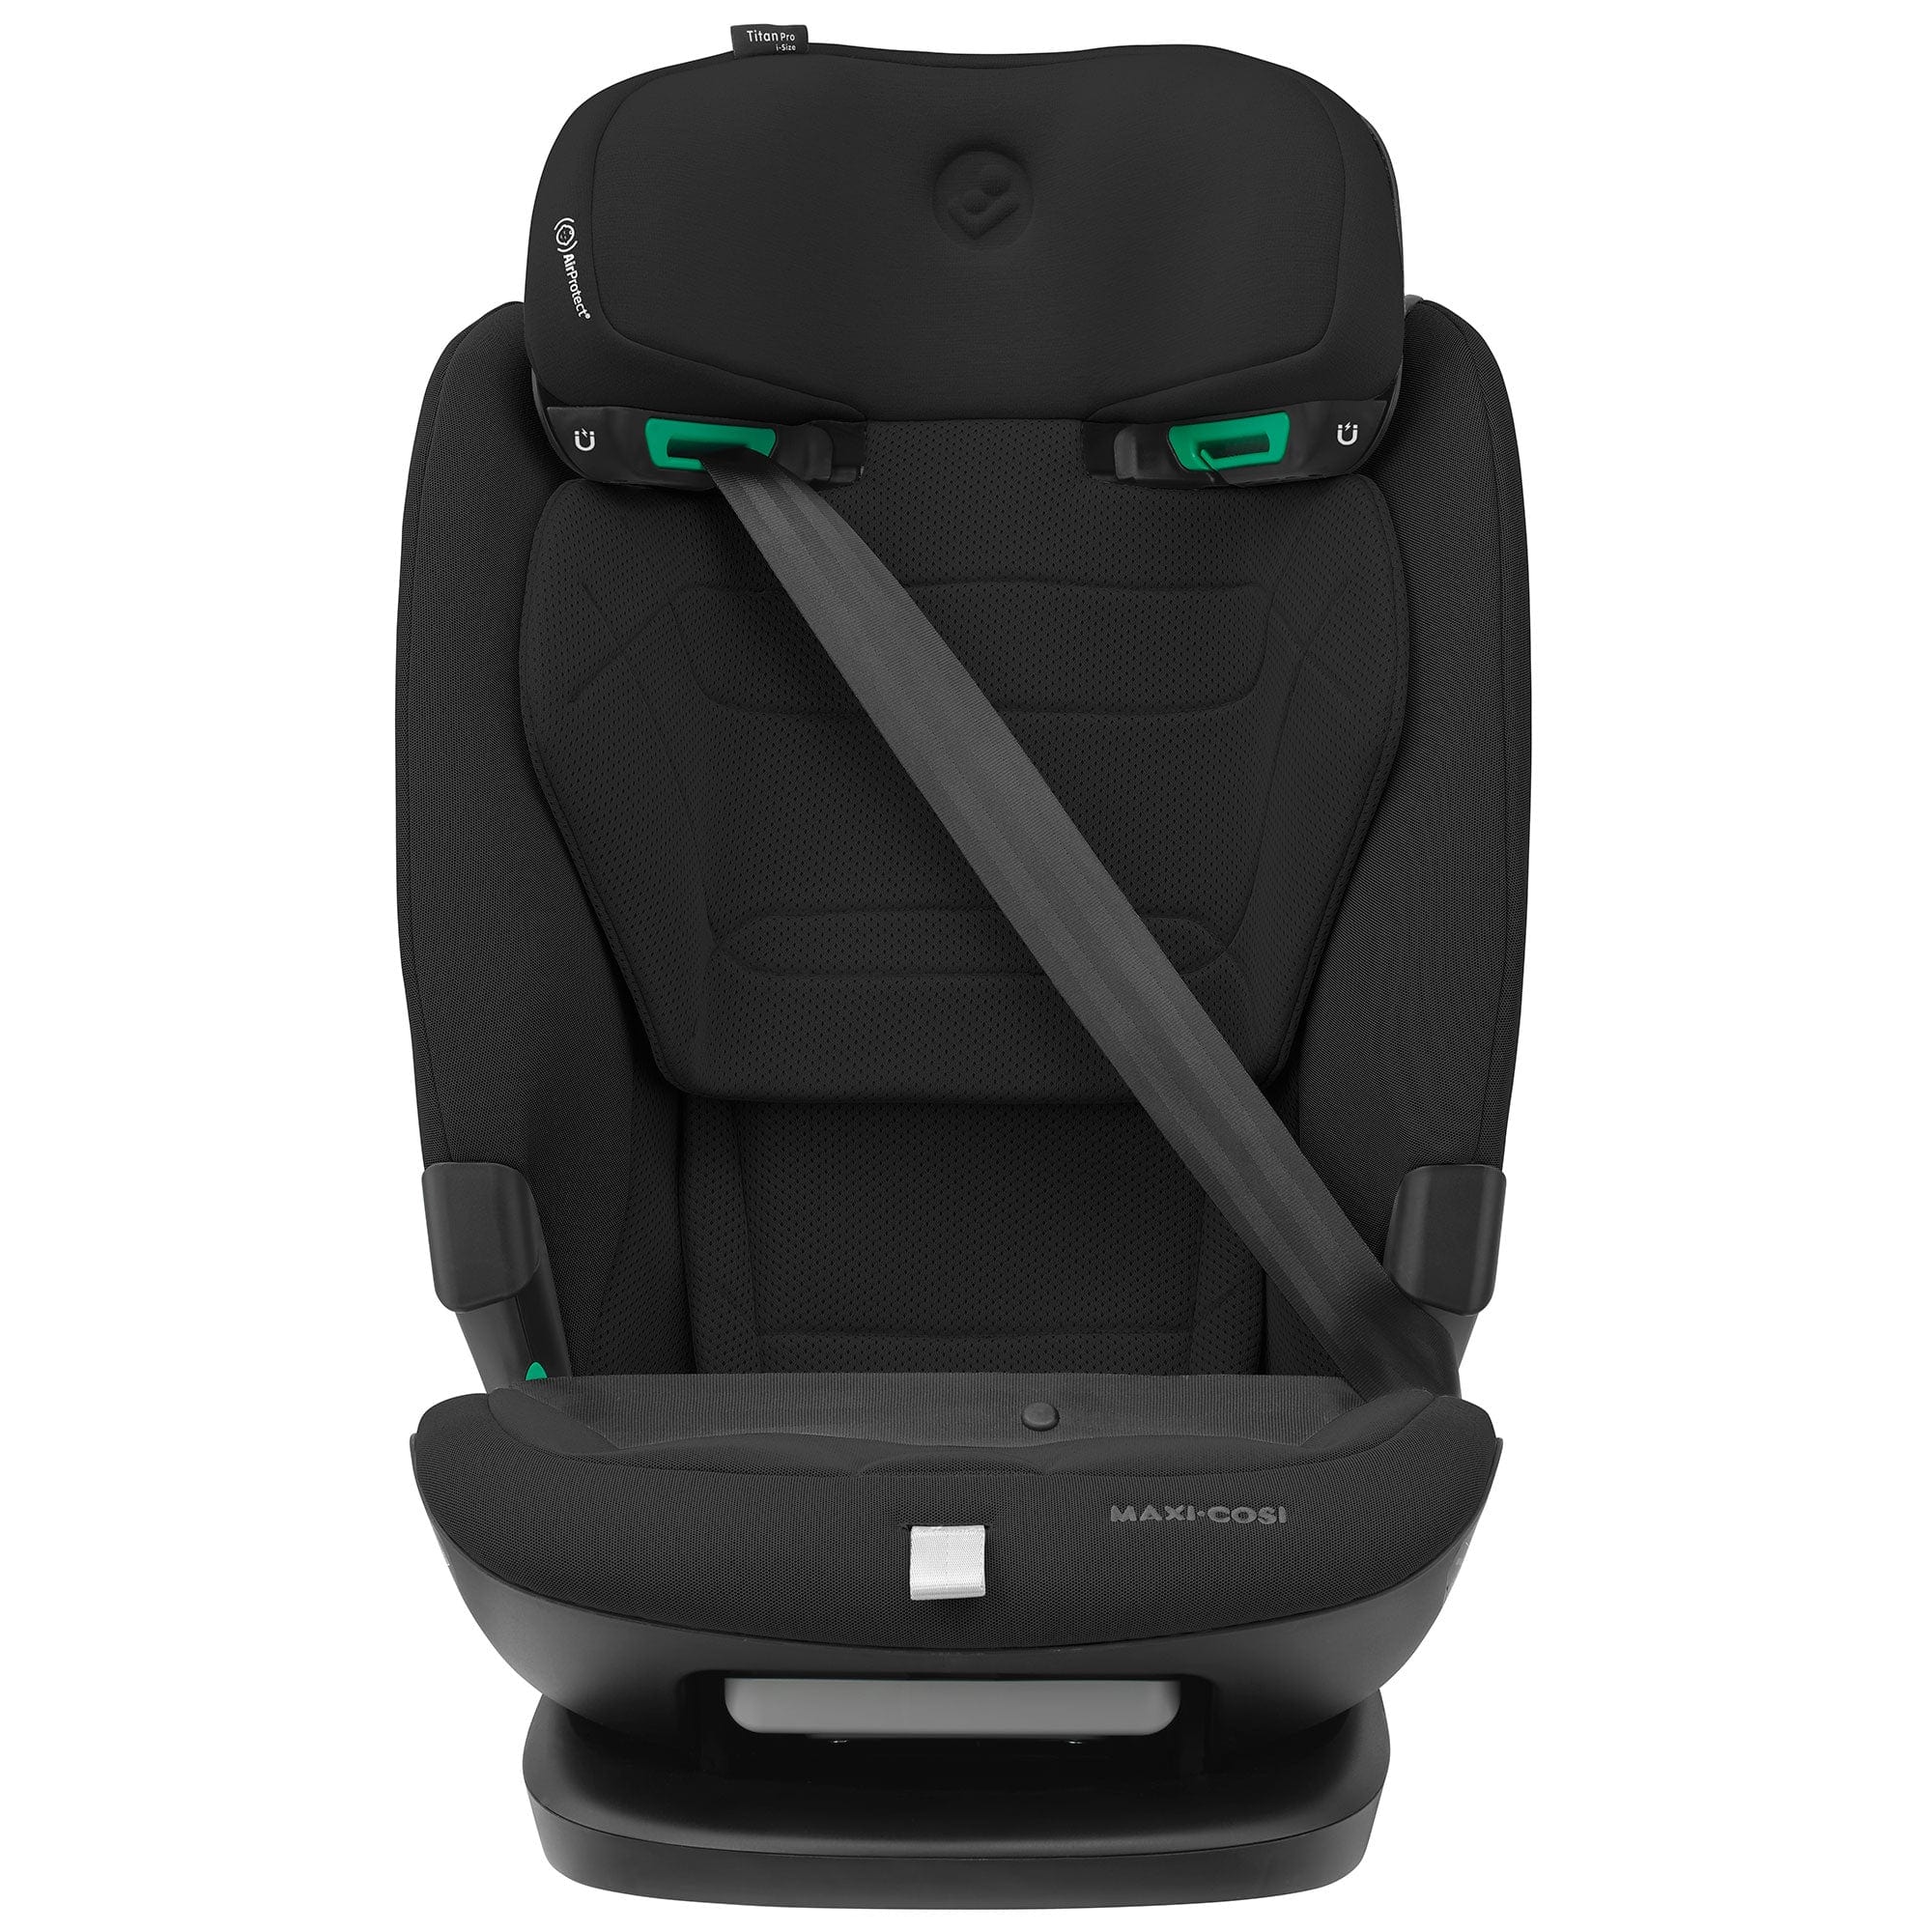 Maxi-Cosi Titan Pro 2 i-Size Car Seat in Authentic Black Combination Car Seats 8618671111 8712930183457